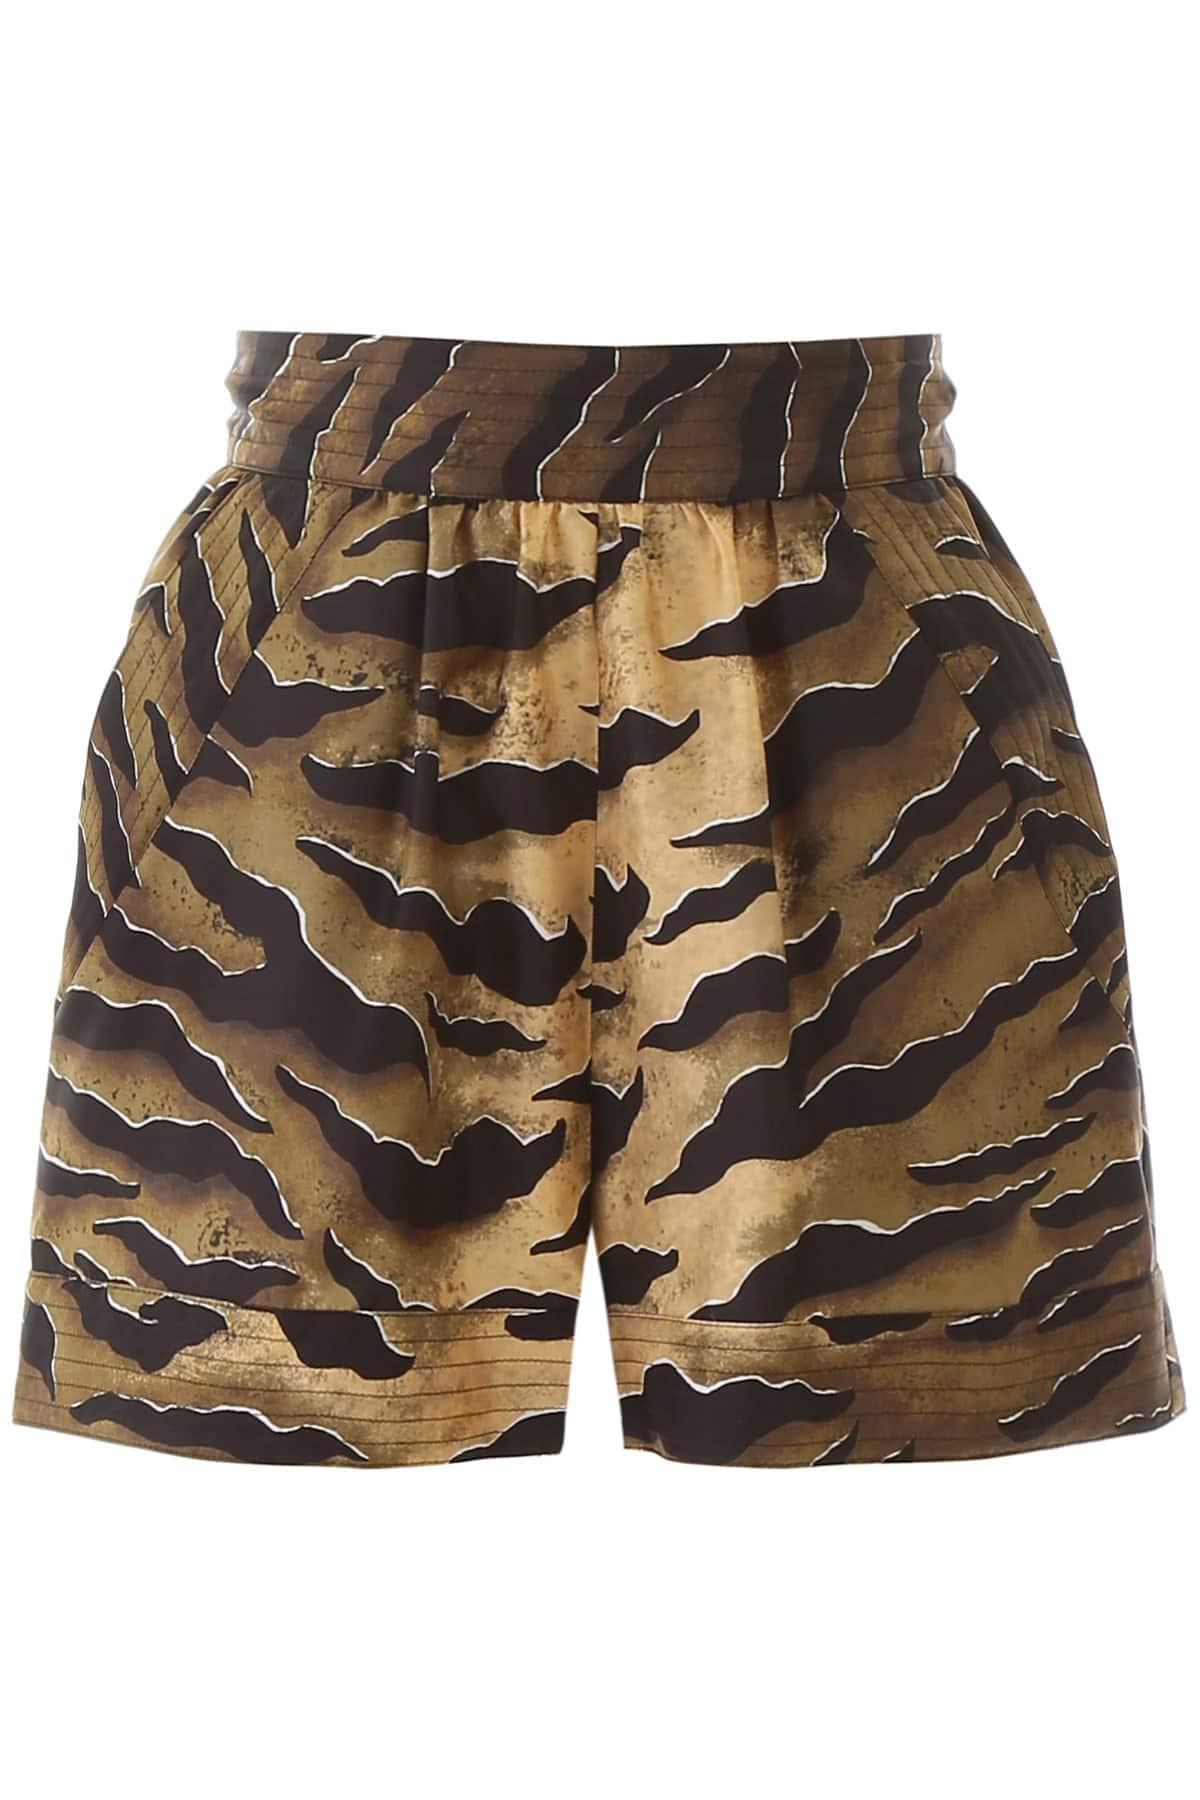 DSquared² Satin Tiger Shorts in Beige,Black,Khaki (Natural) - Lyst